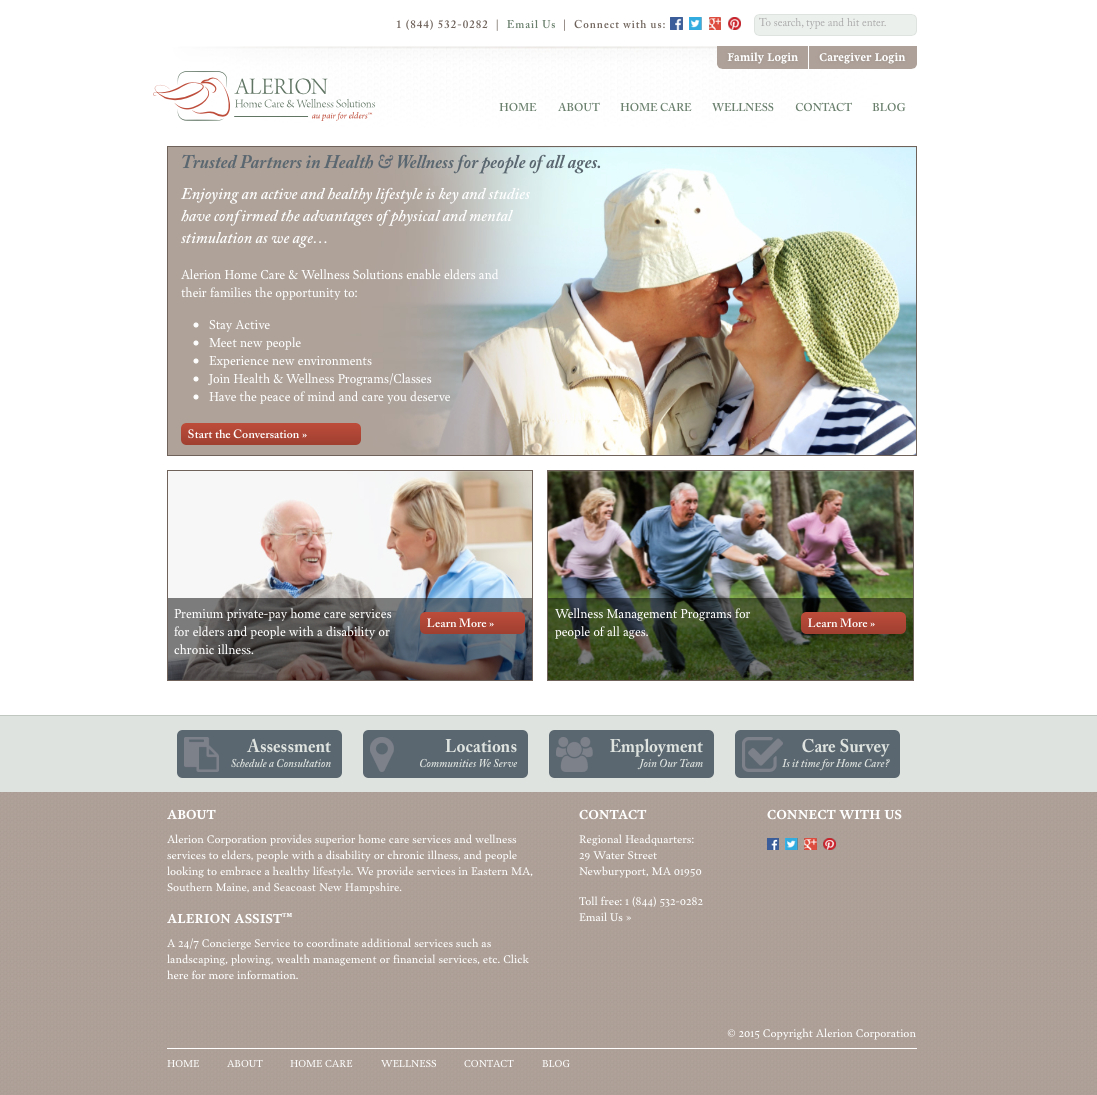 Alerion Home Care & Wellness Solutions